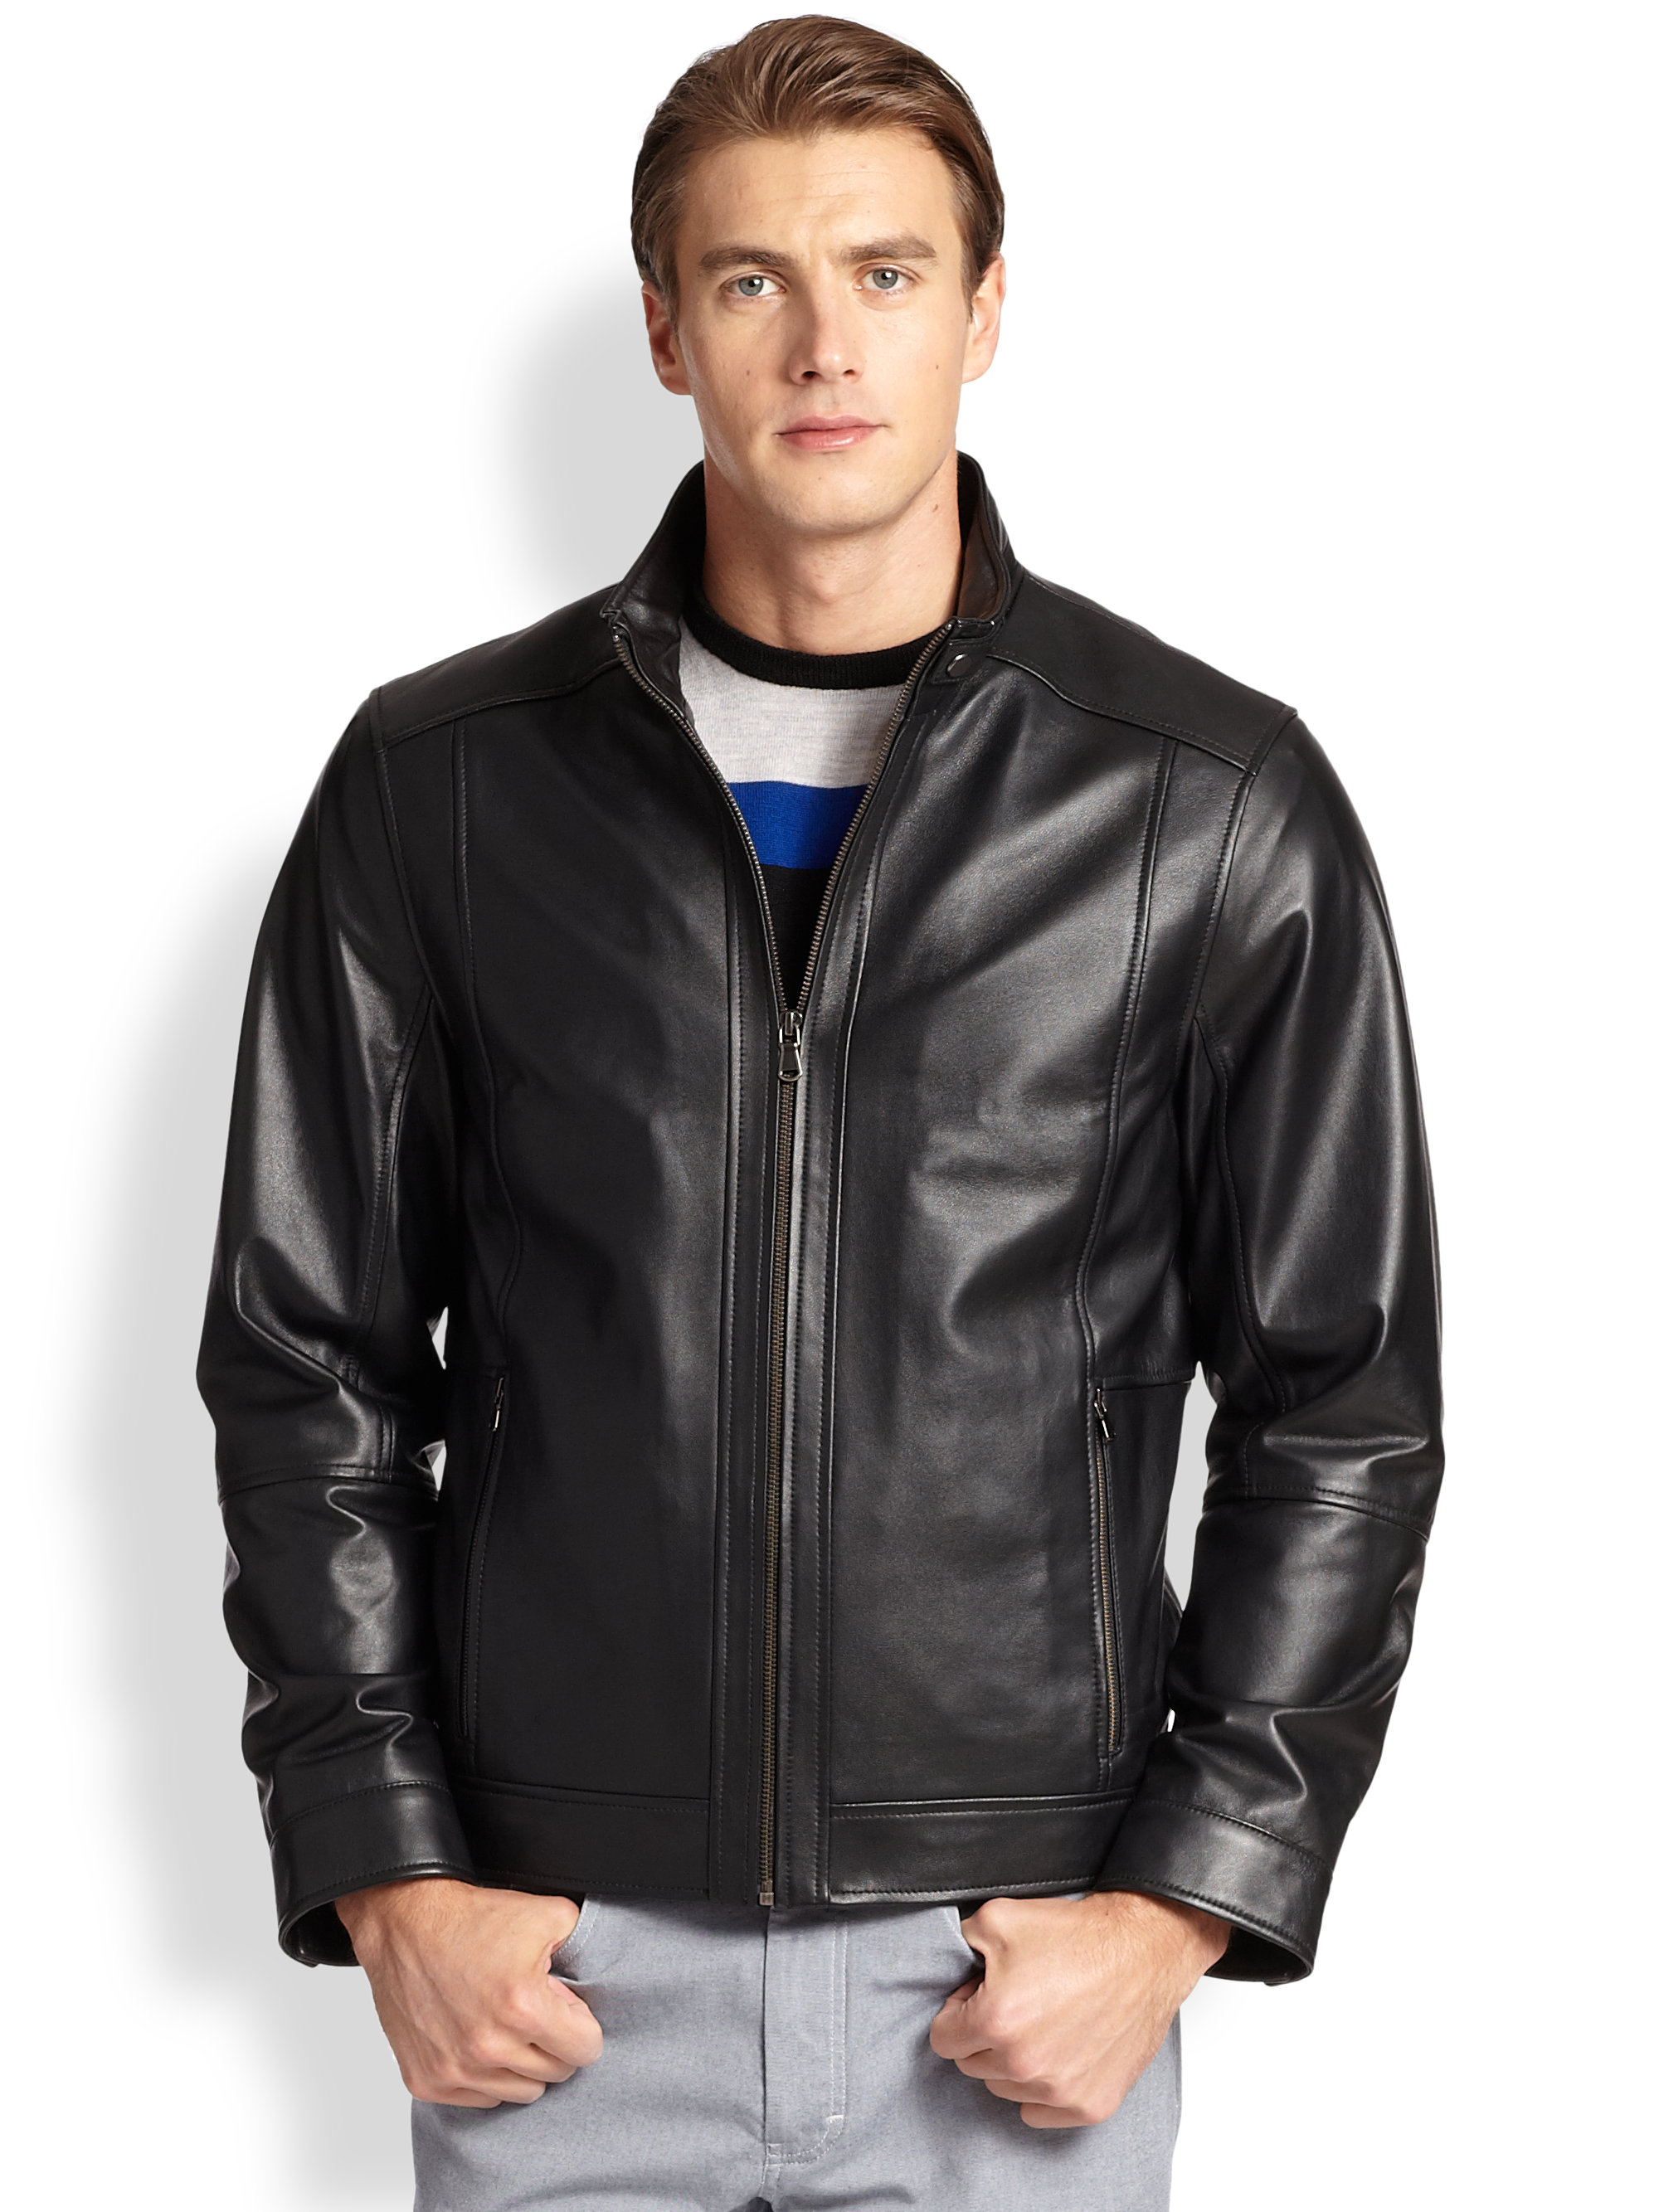 Saks Fifth Avenue Lightweight Leather Bomber Jacket in Black for Men - Lyst